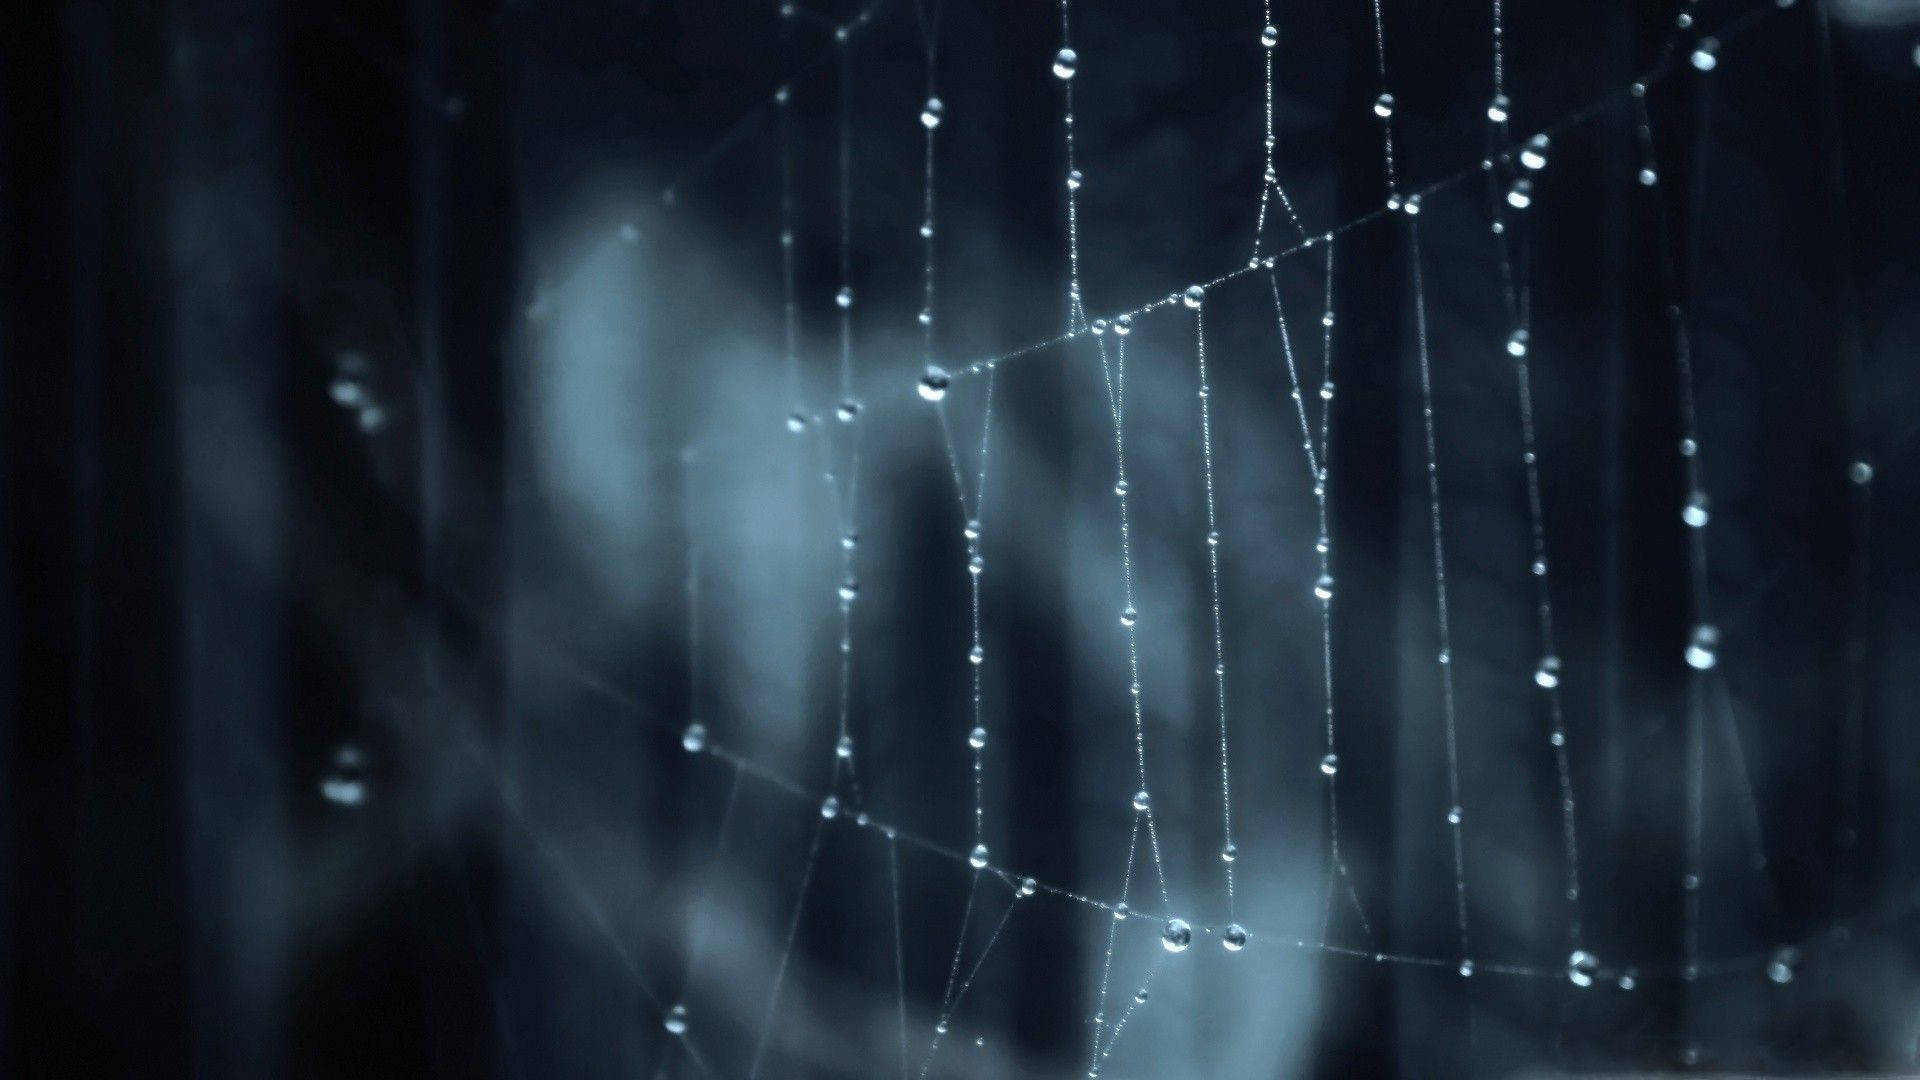 Caption: Majestic Dew Drops On Spider Web Background